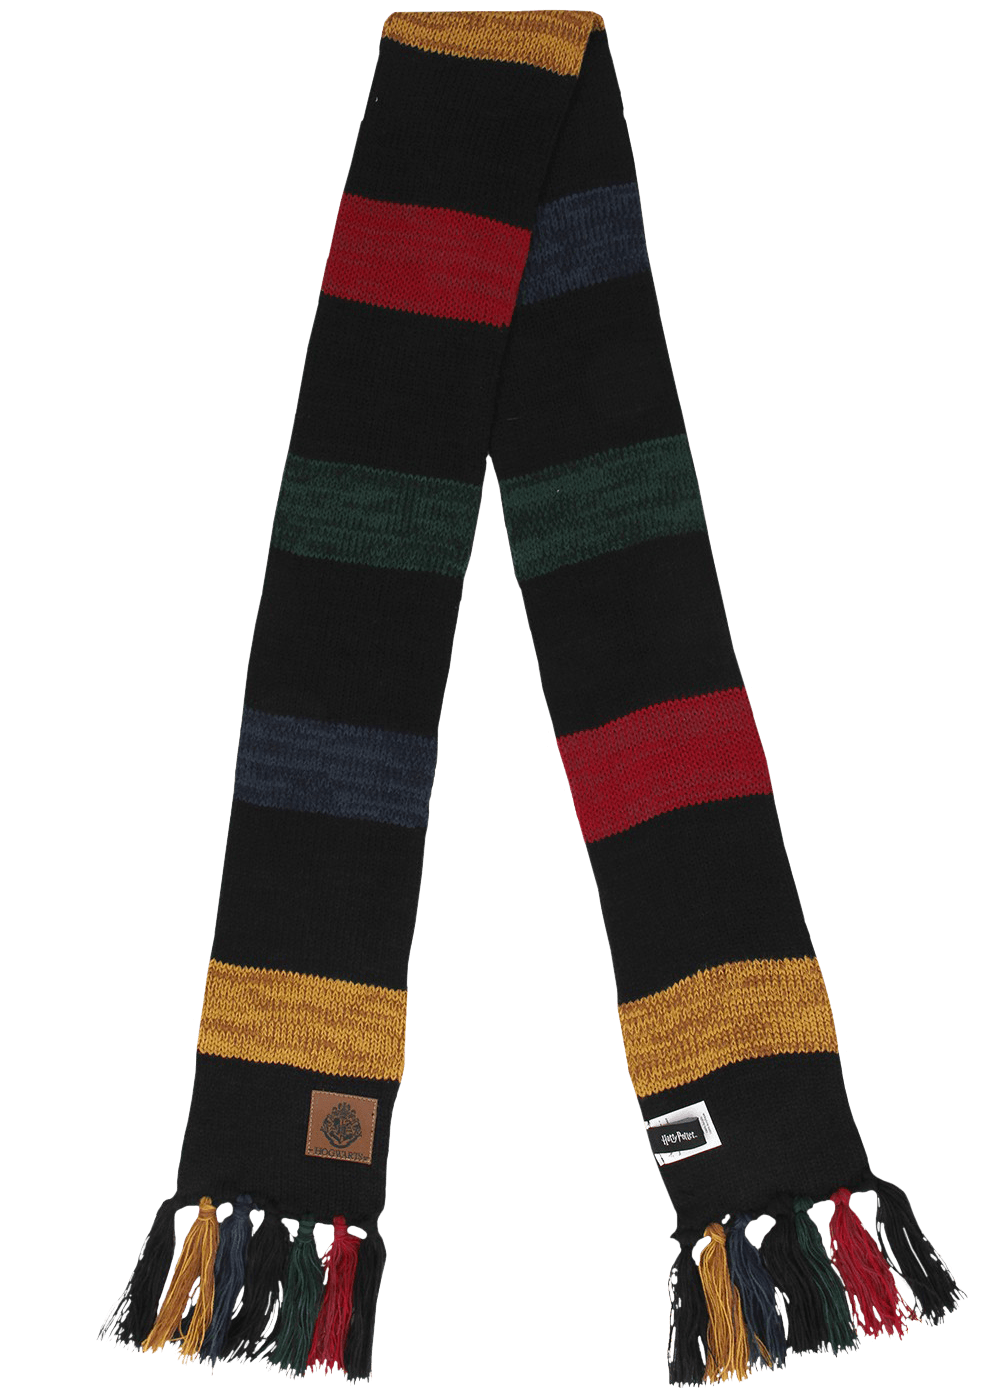 ELO440005 Harry Potter - Hogwarts Heathered Knit Scarf - Elope - Titan Pop Culture